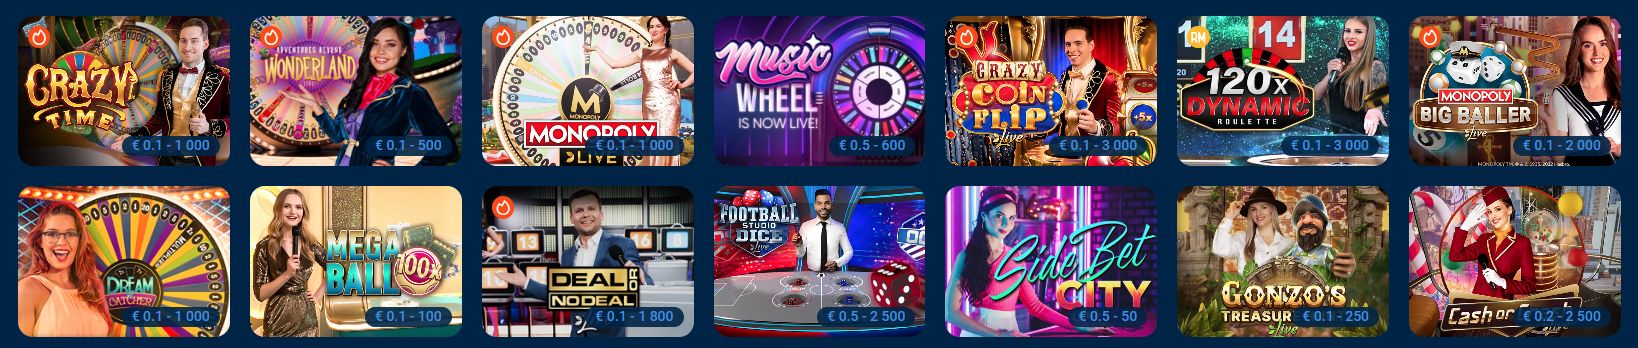 mostbetcasino india.online online casino